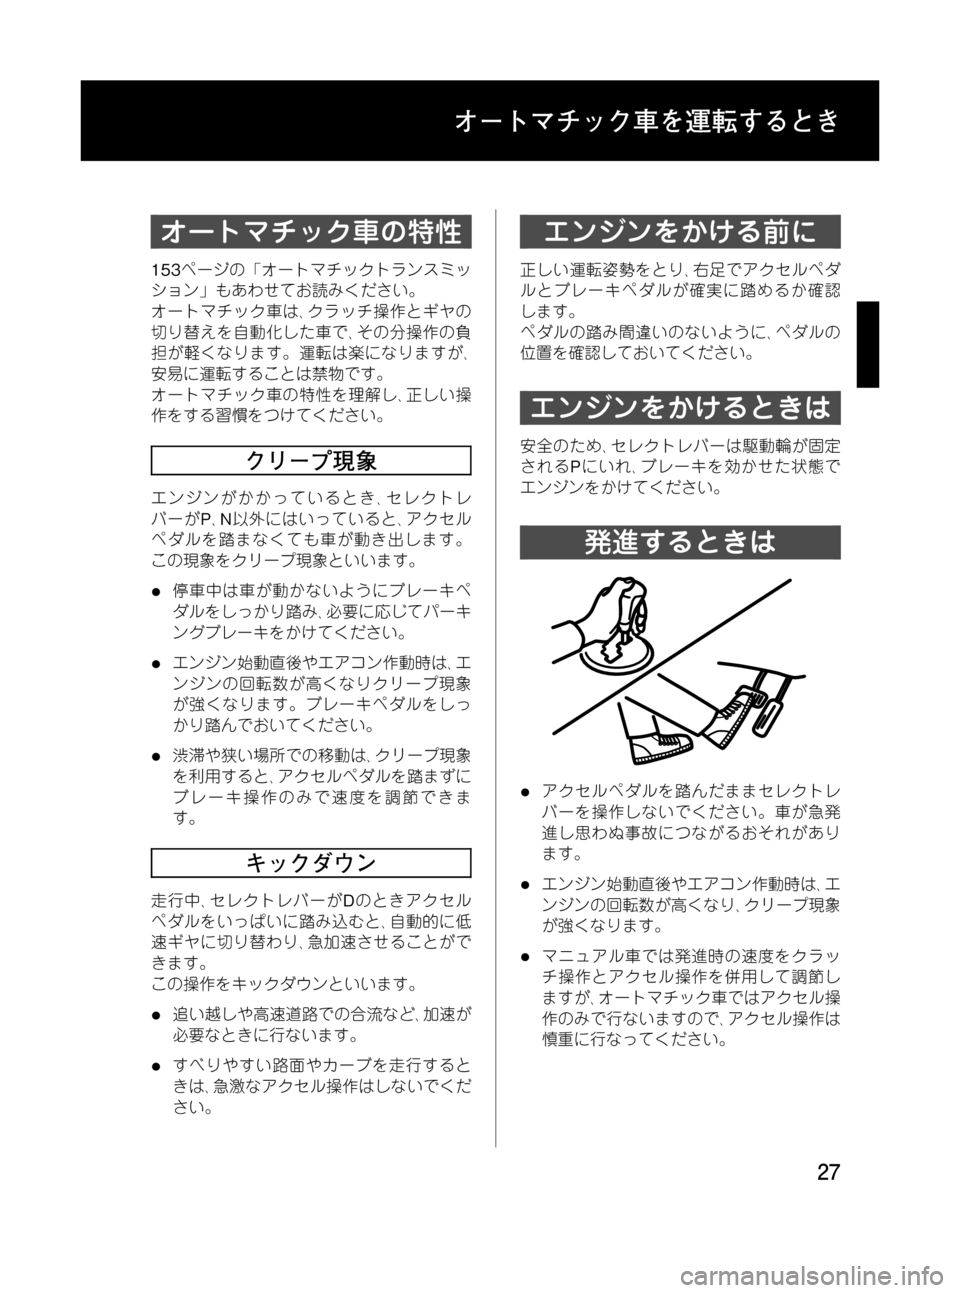 MAZDA MODEL RX 8 2008  取扱説明書 (in Japanese) Black plate (27,1)
オートマチック車の特性
153ページの「オートマチックトランスミッ
ション」もあわせてお読みください。
オートマチック車は､クラ�